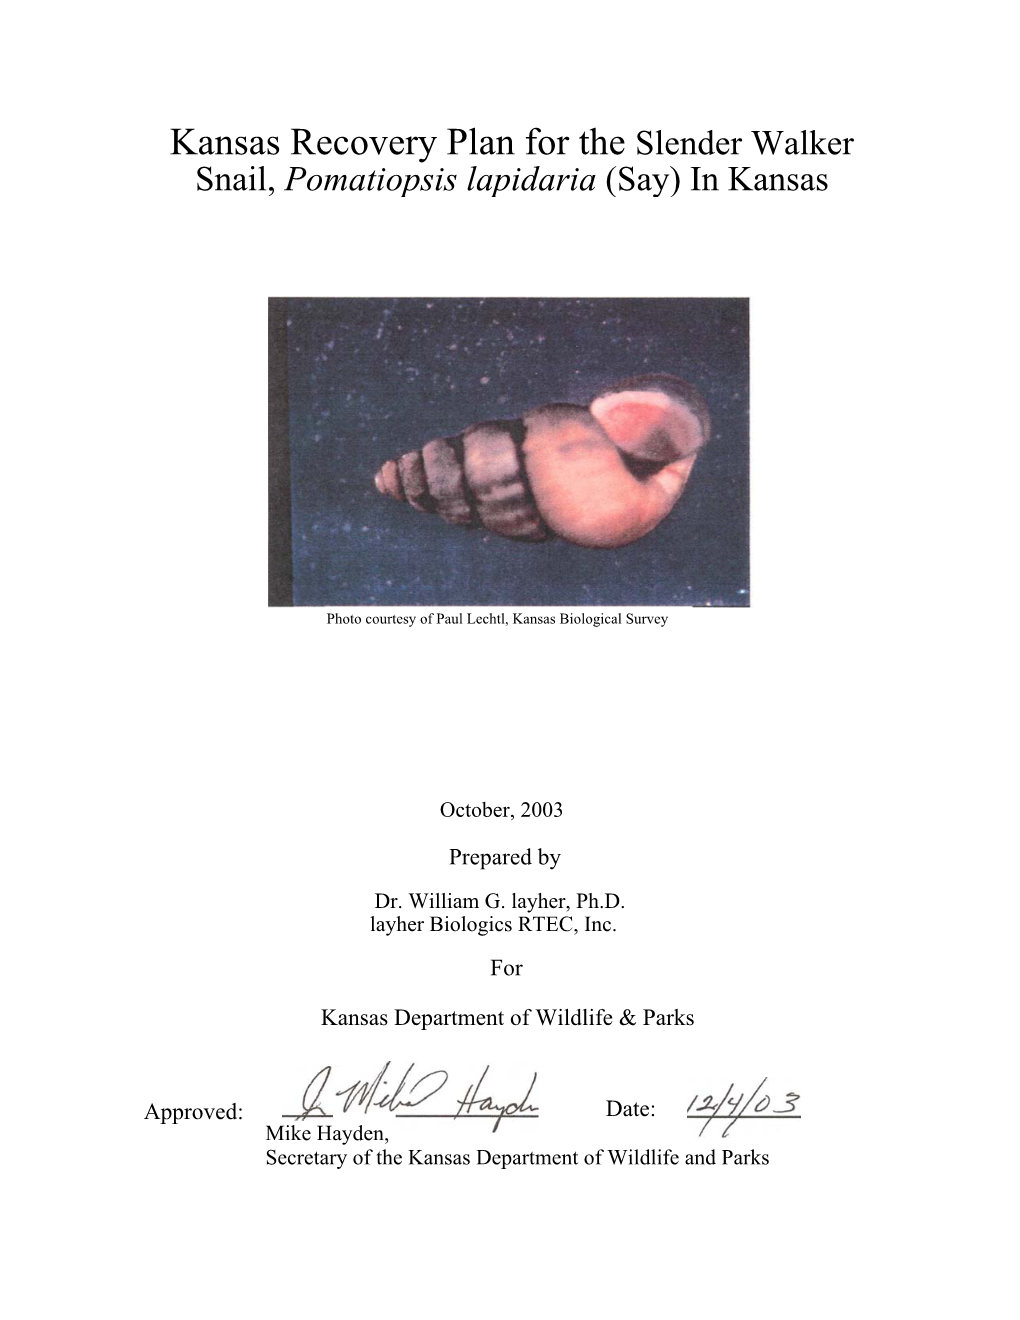 Slender Walker Snail, Pomatiopsis Lapidaria (Say) in Kansas